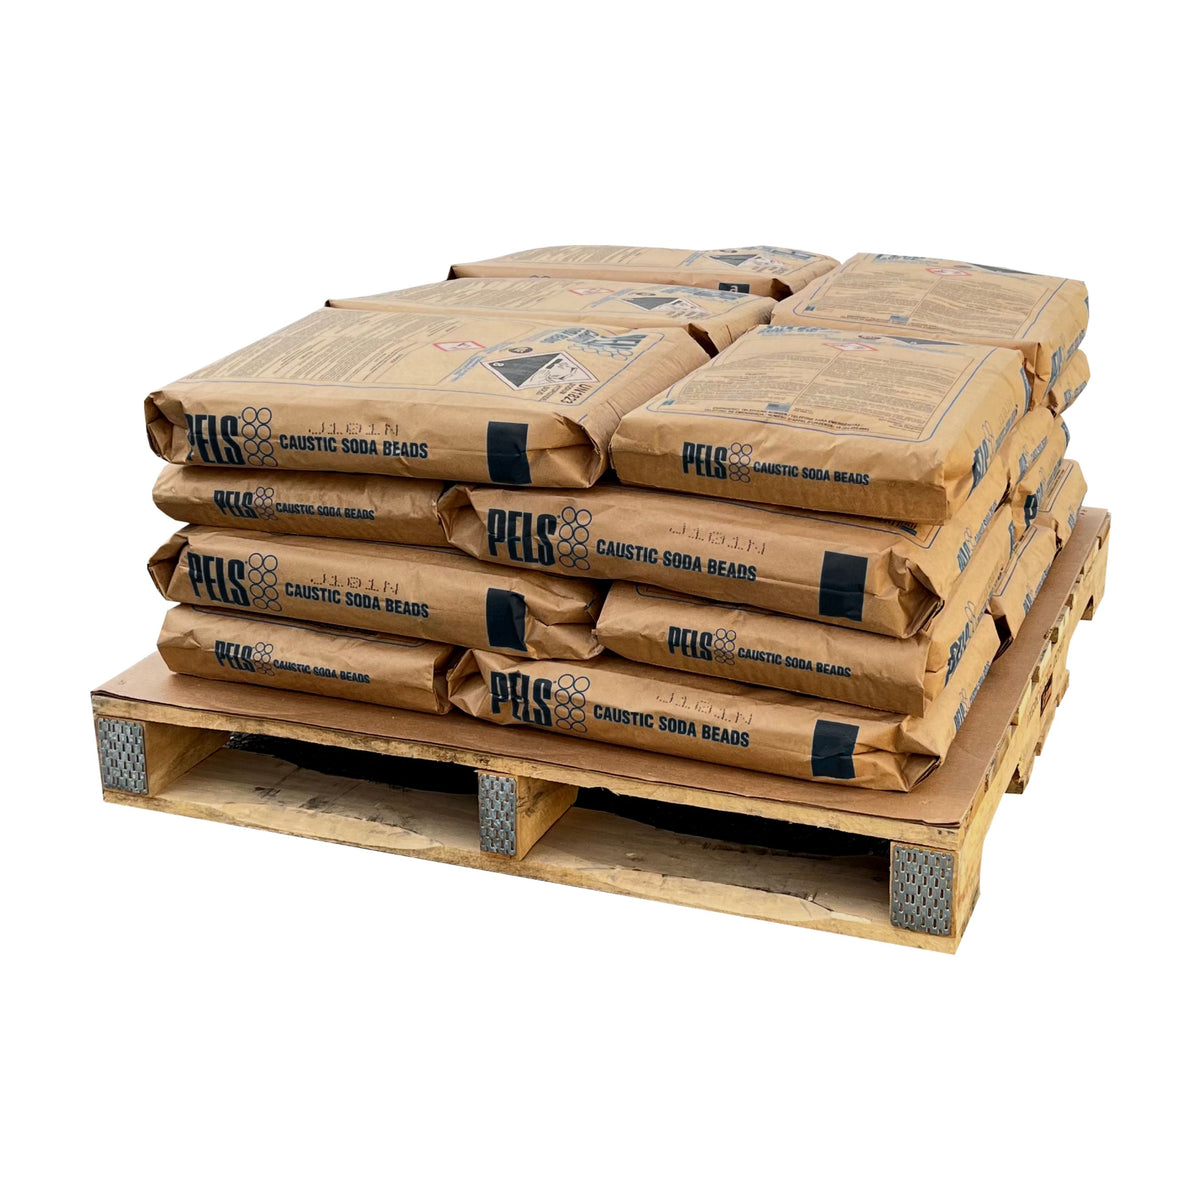 Ingredient Depot Sodium Hydroxide 1250 lbs 25 Bags on Pallet